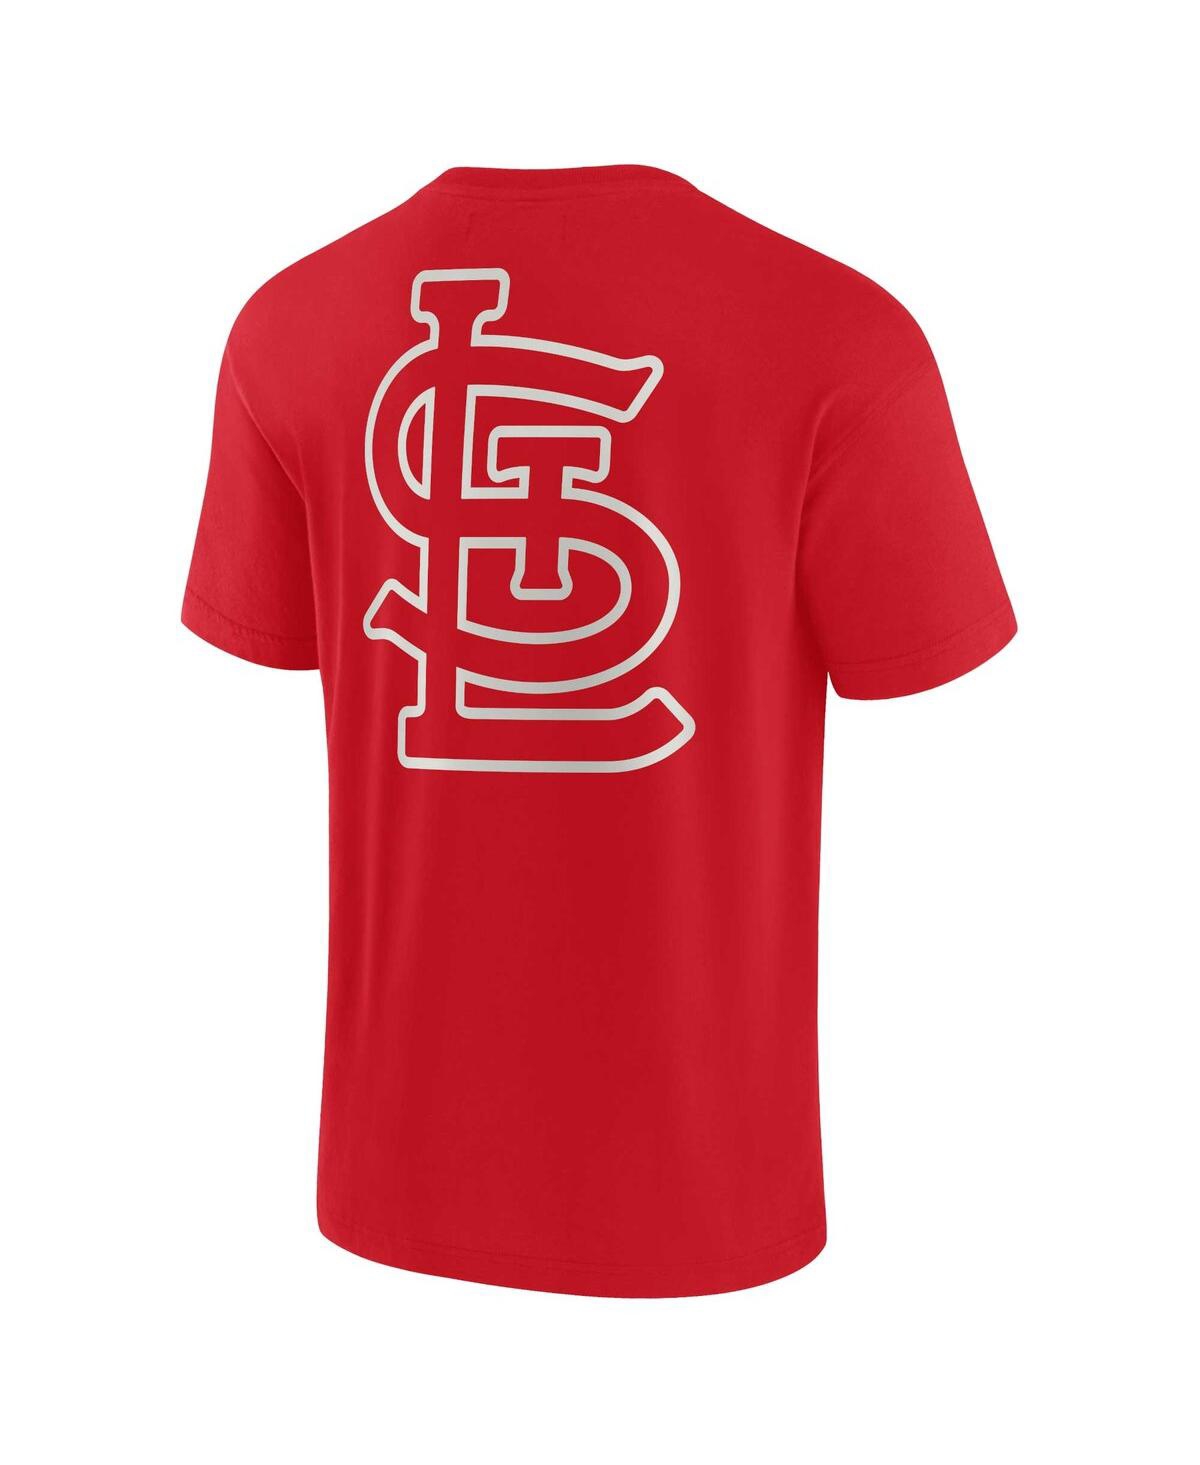 Shop Fanatics Signature Men's And Women's  Red St. Louis Cardinals Super Soft Short Sleeve T-shirt